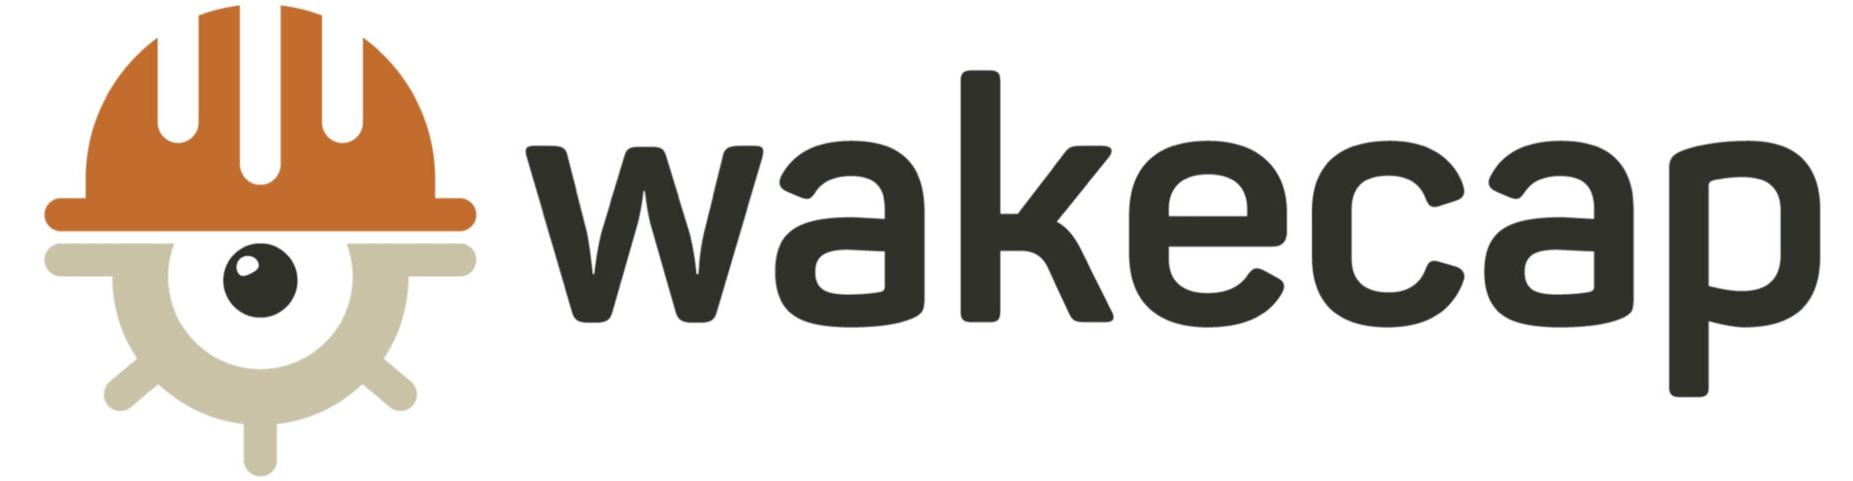 wakecap logo